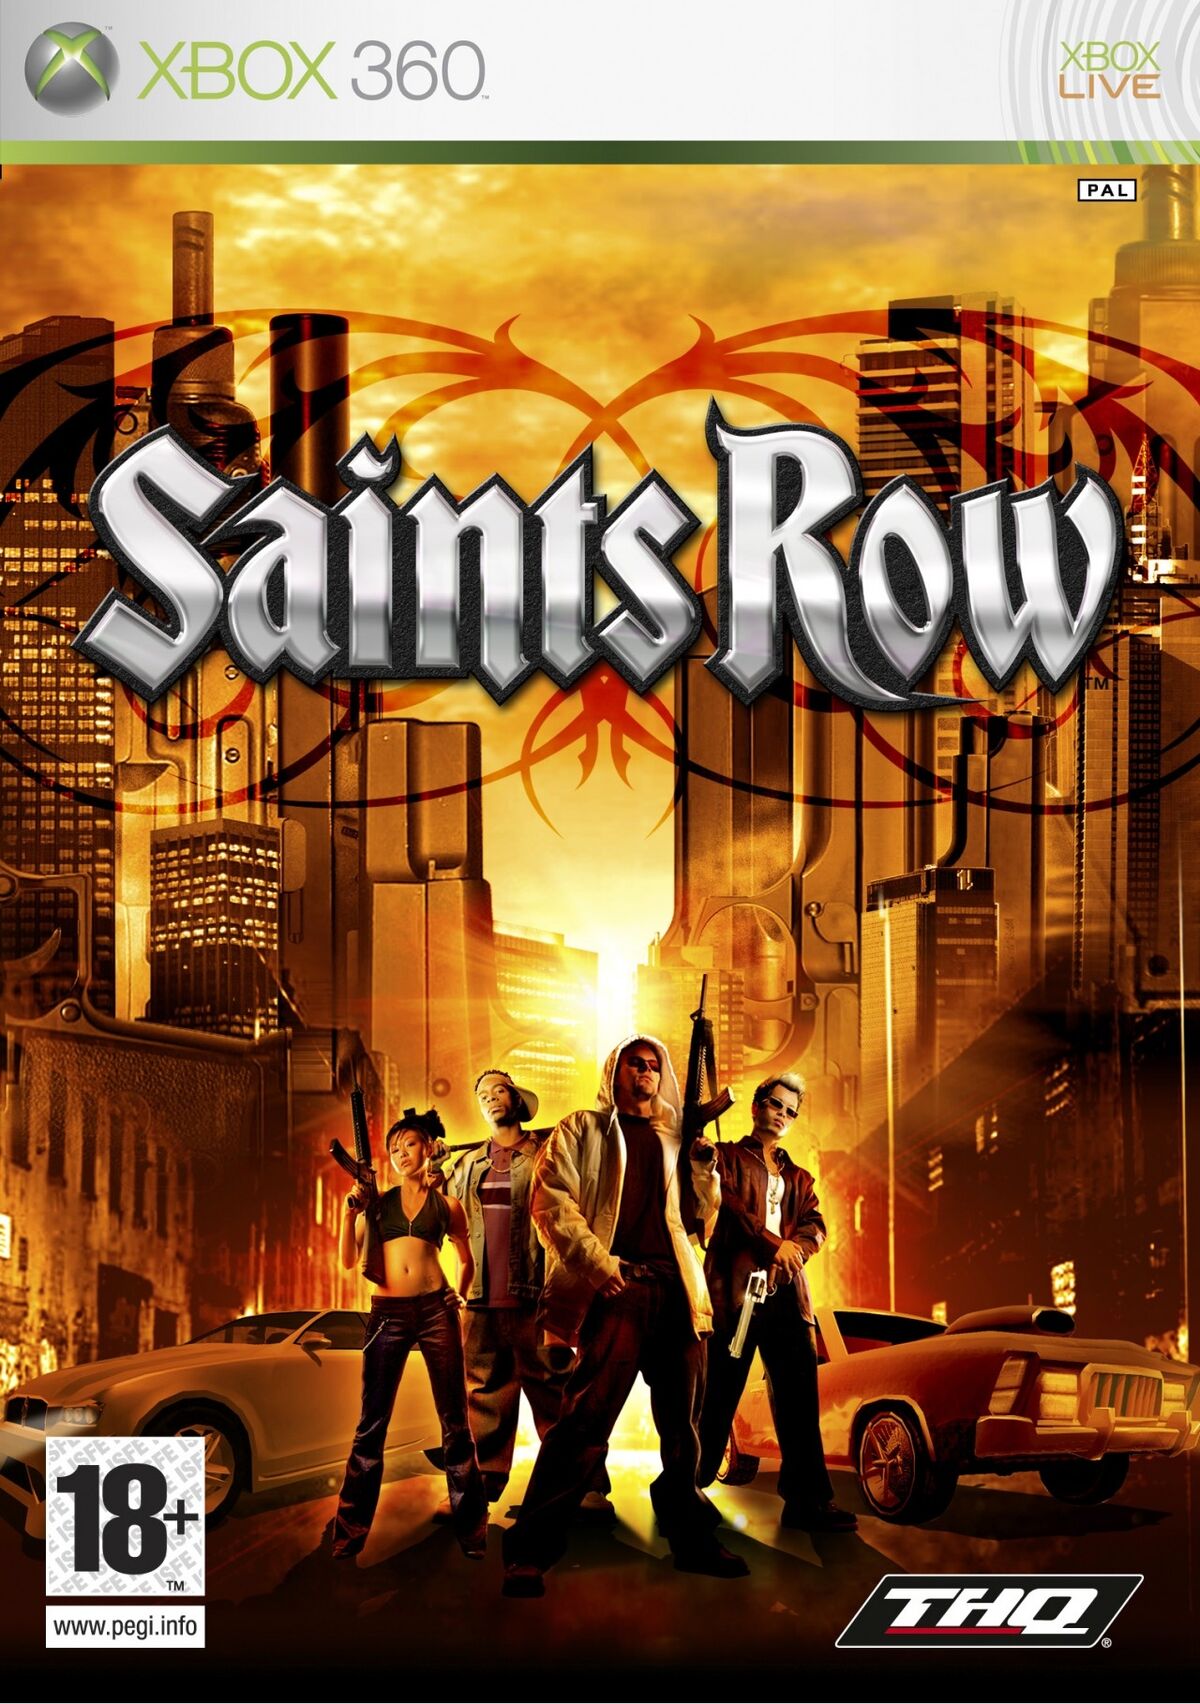 Saints Row (2022 video game) - Wikipedia